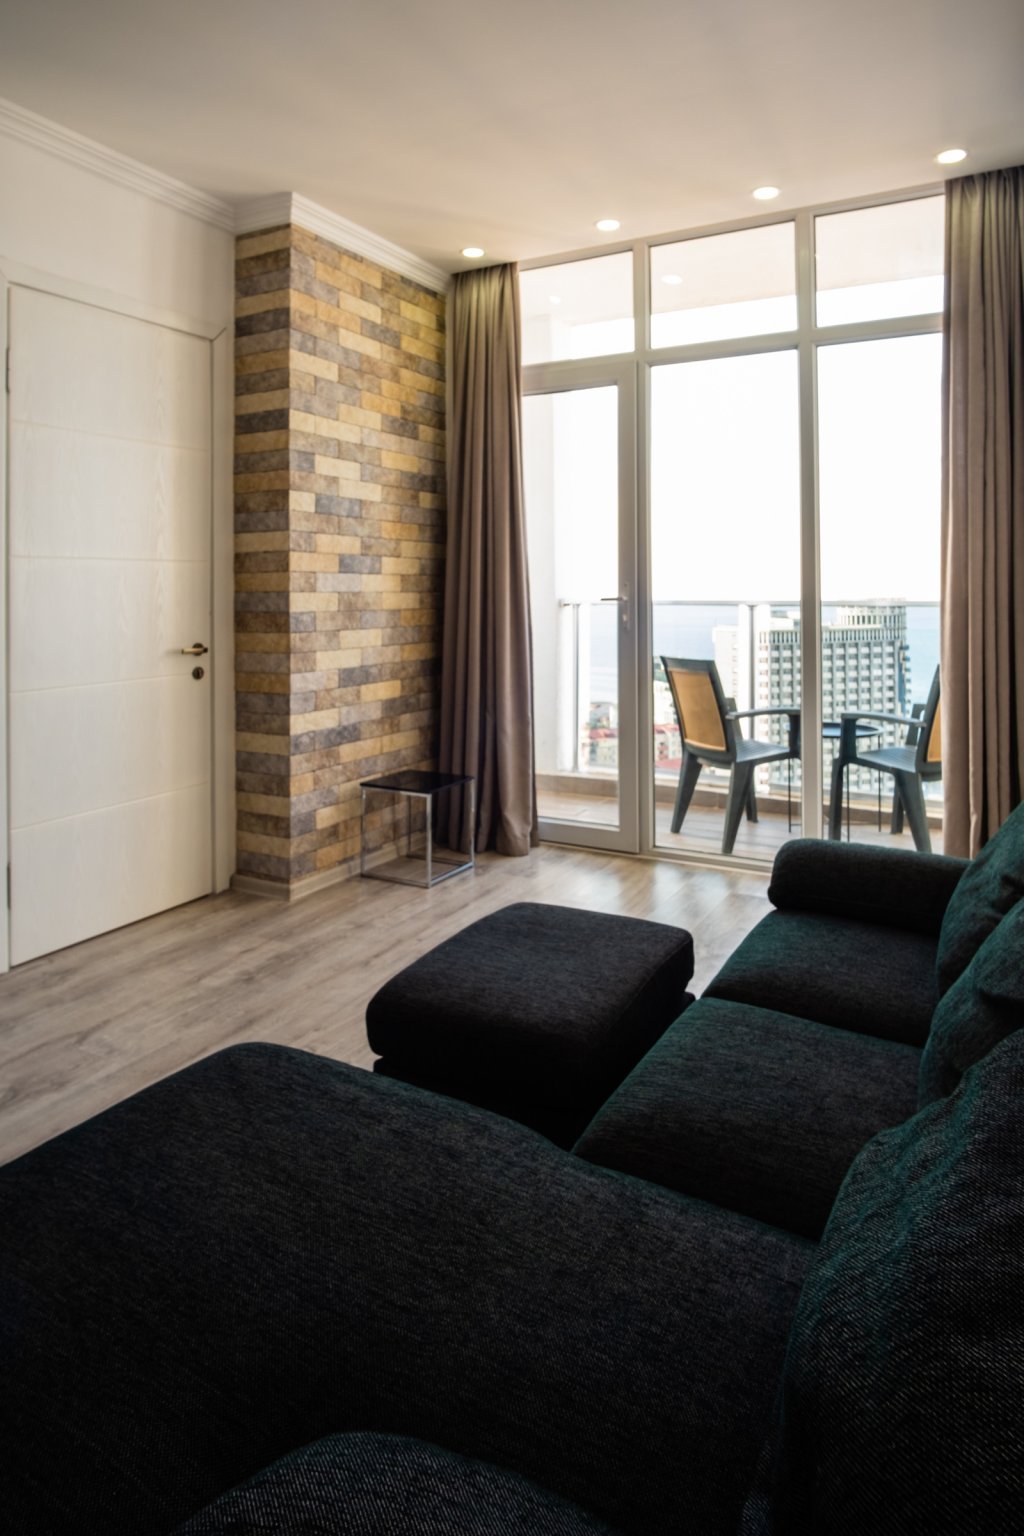 1-bedroom apartment in Real Palace id-1077 - Batumi Vacation Rentals